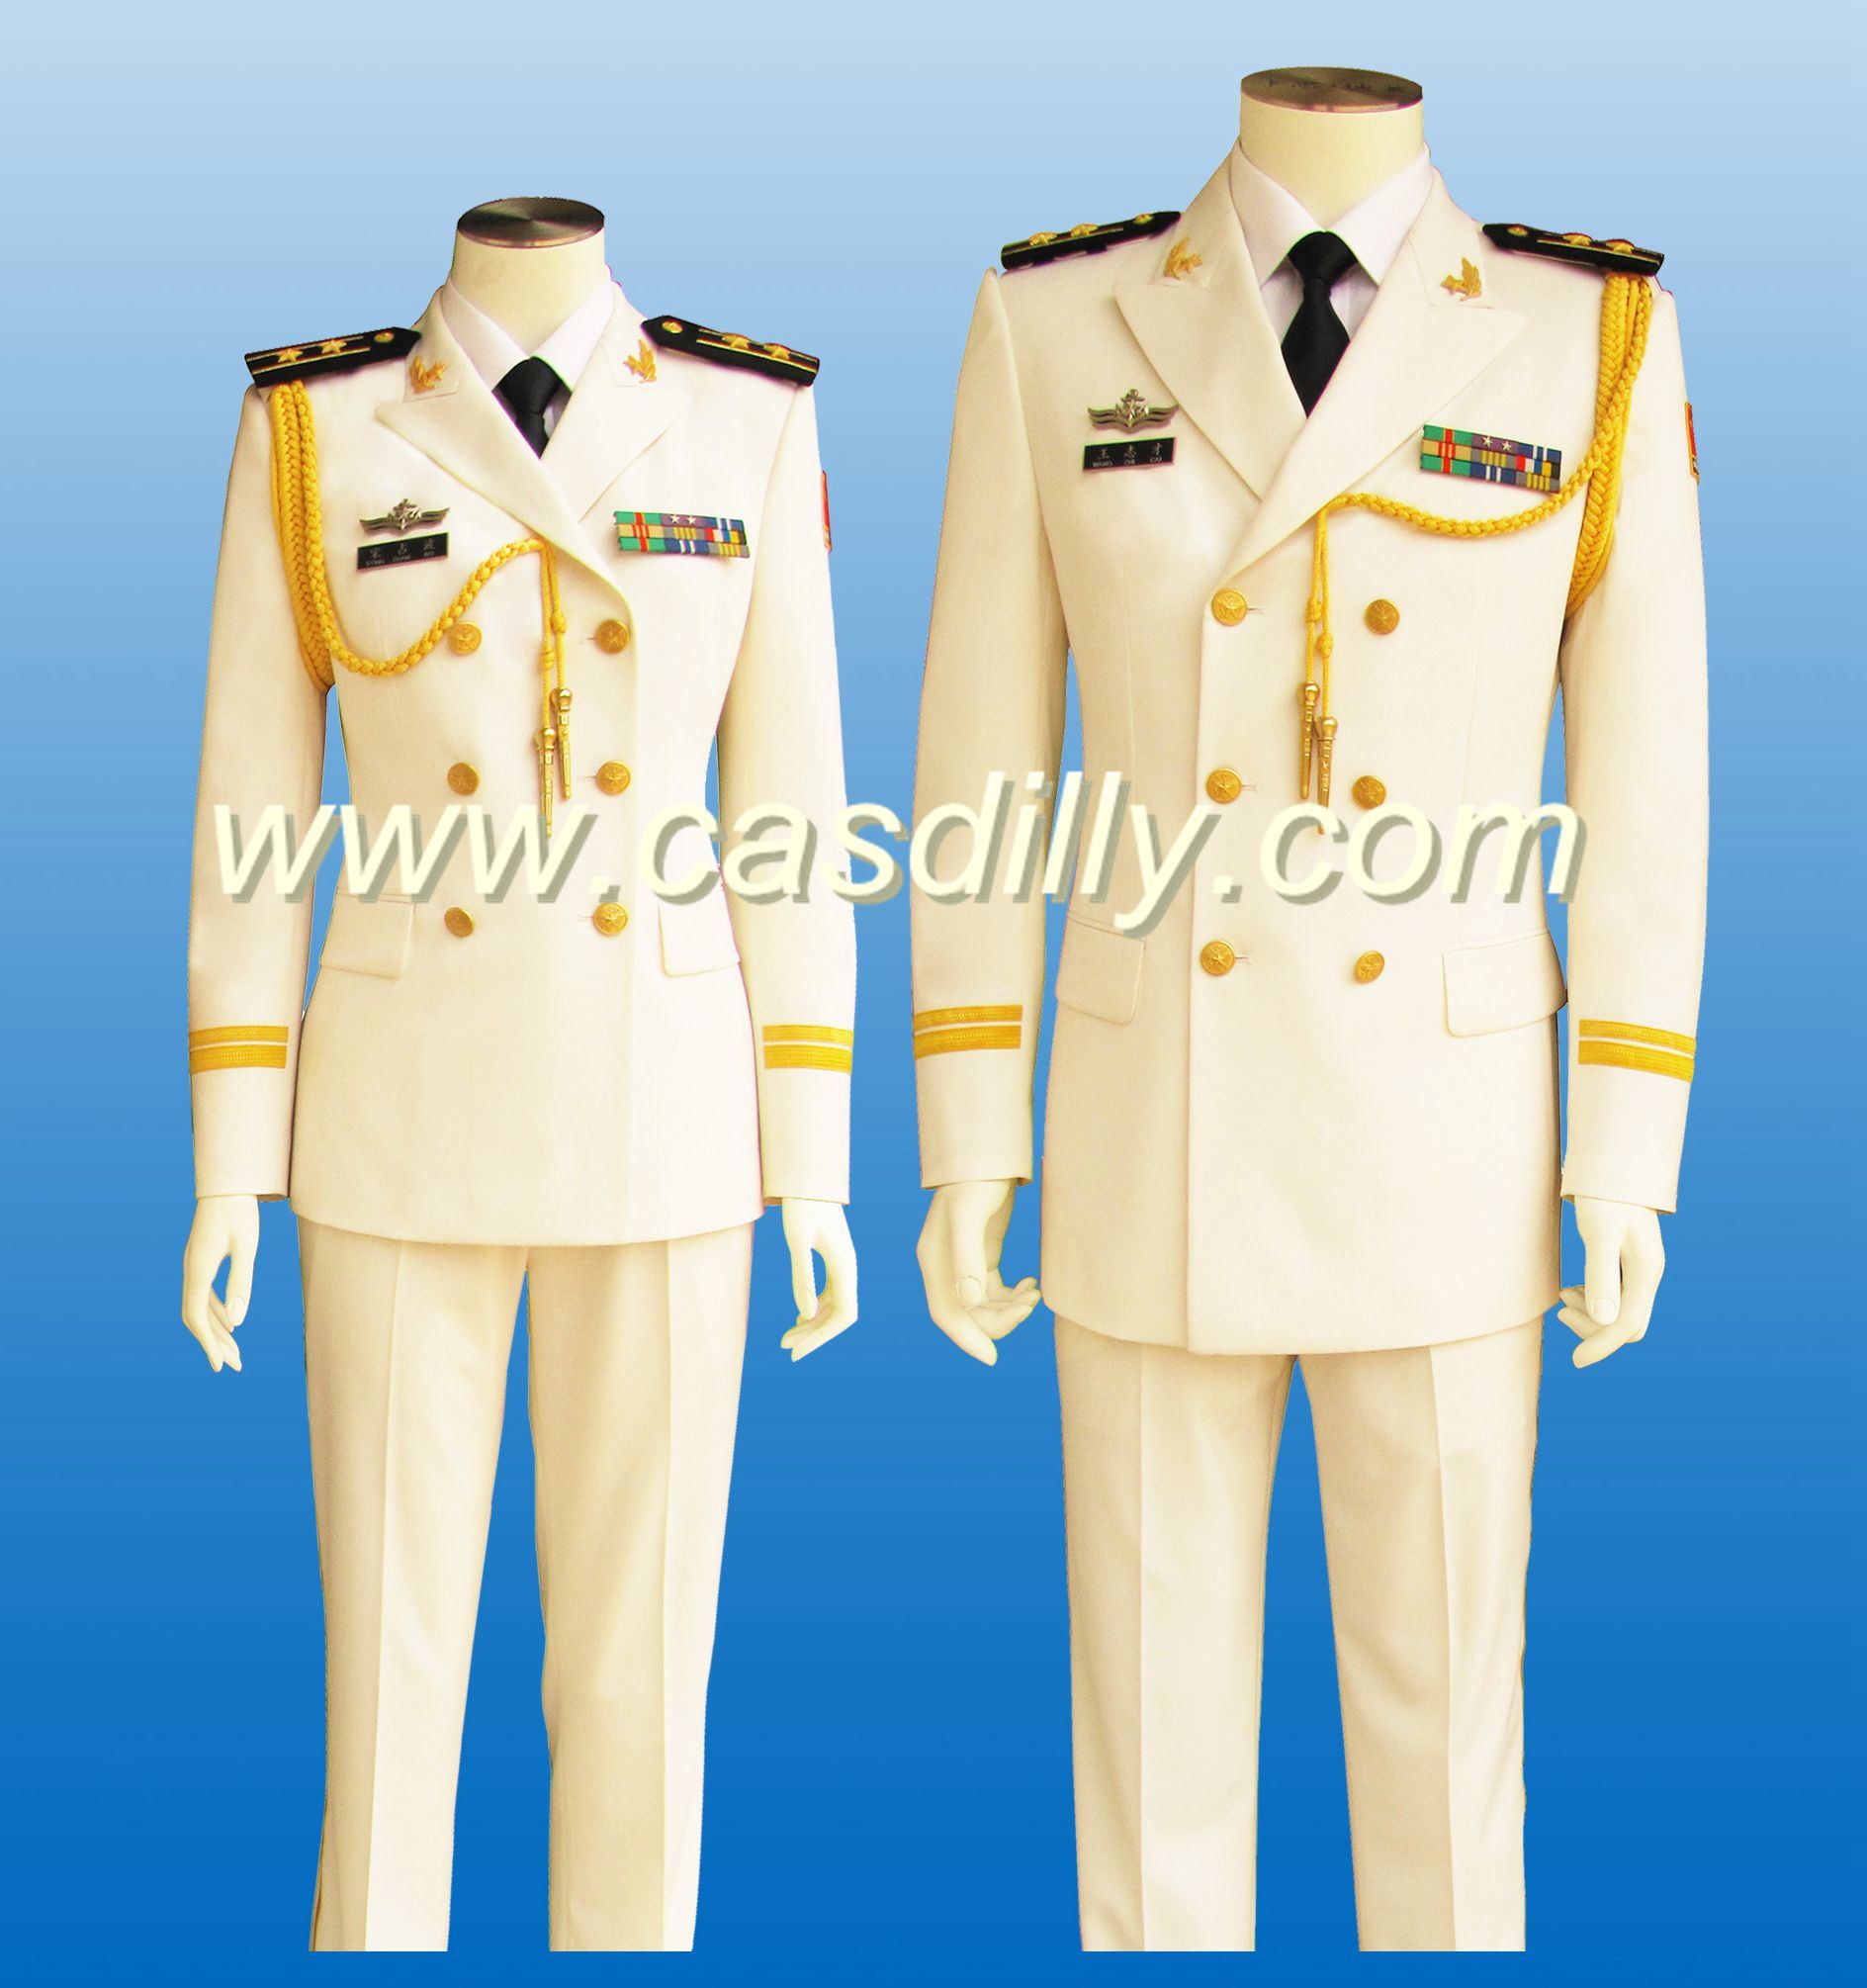 Suit Ceromony of Military Uniforms